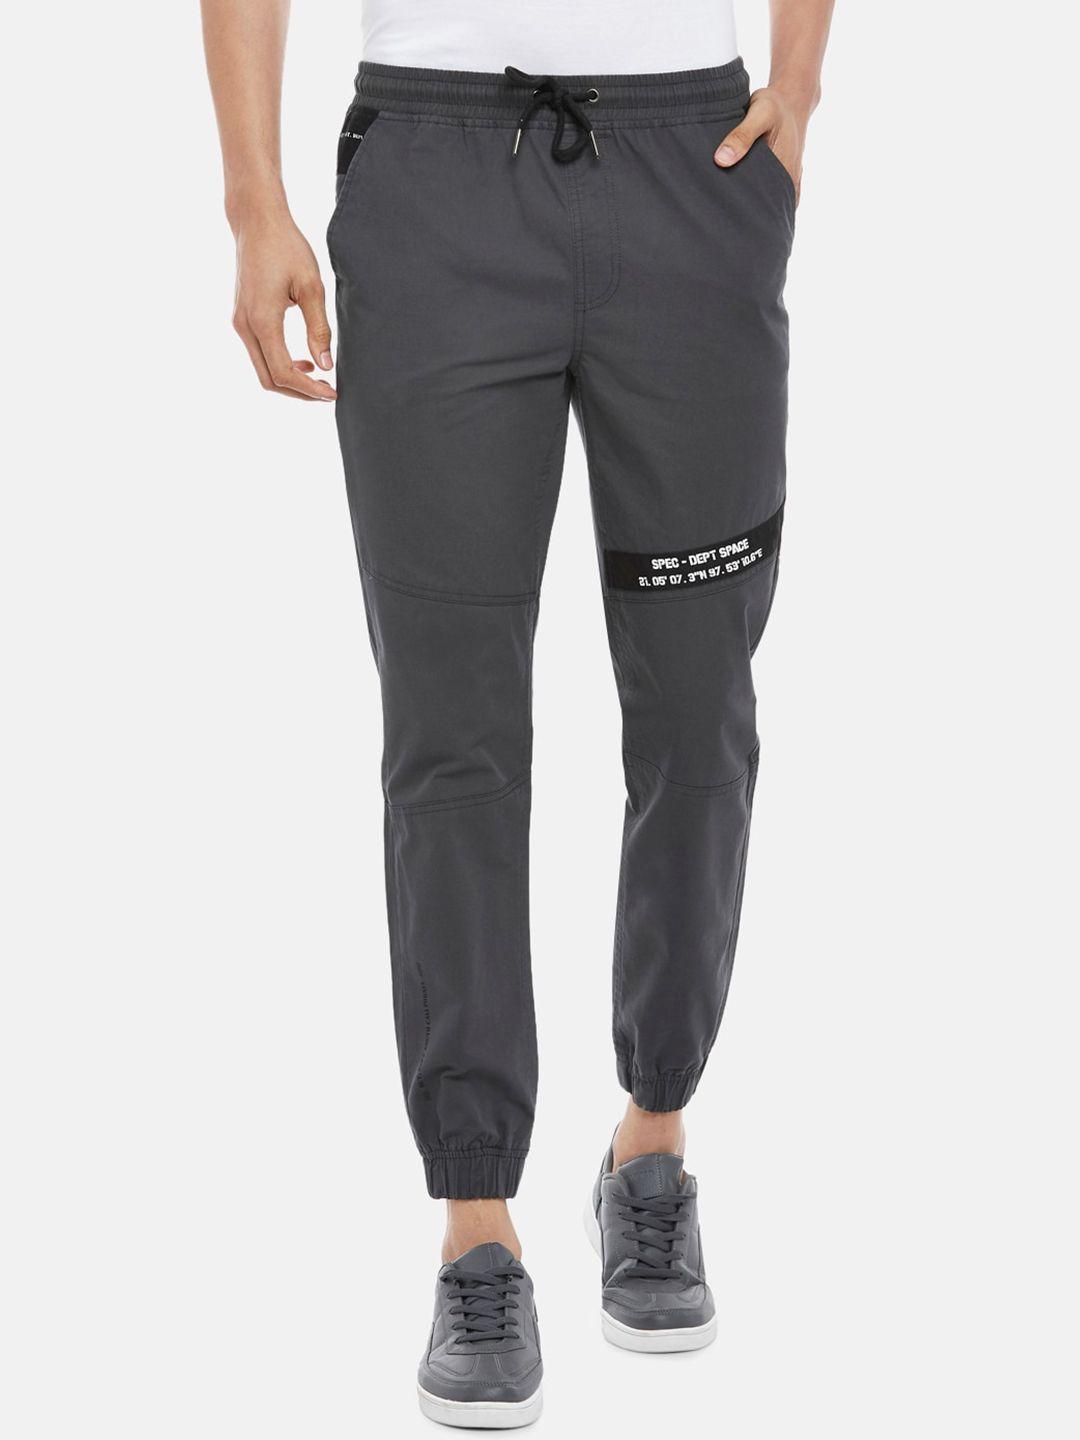 urban ranger by pantaloons men grey slim fit joggers trousers